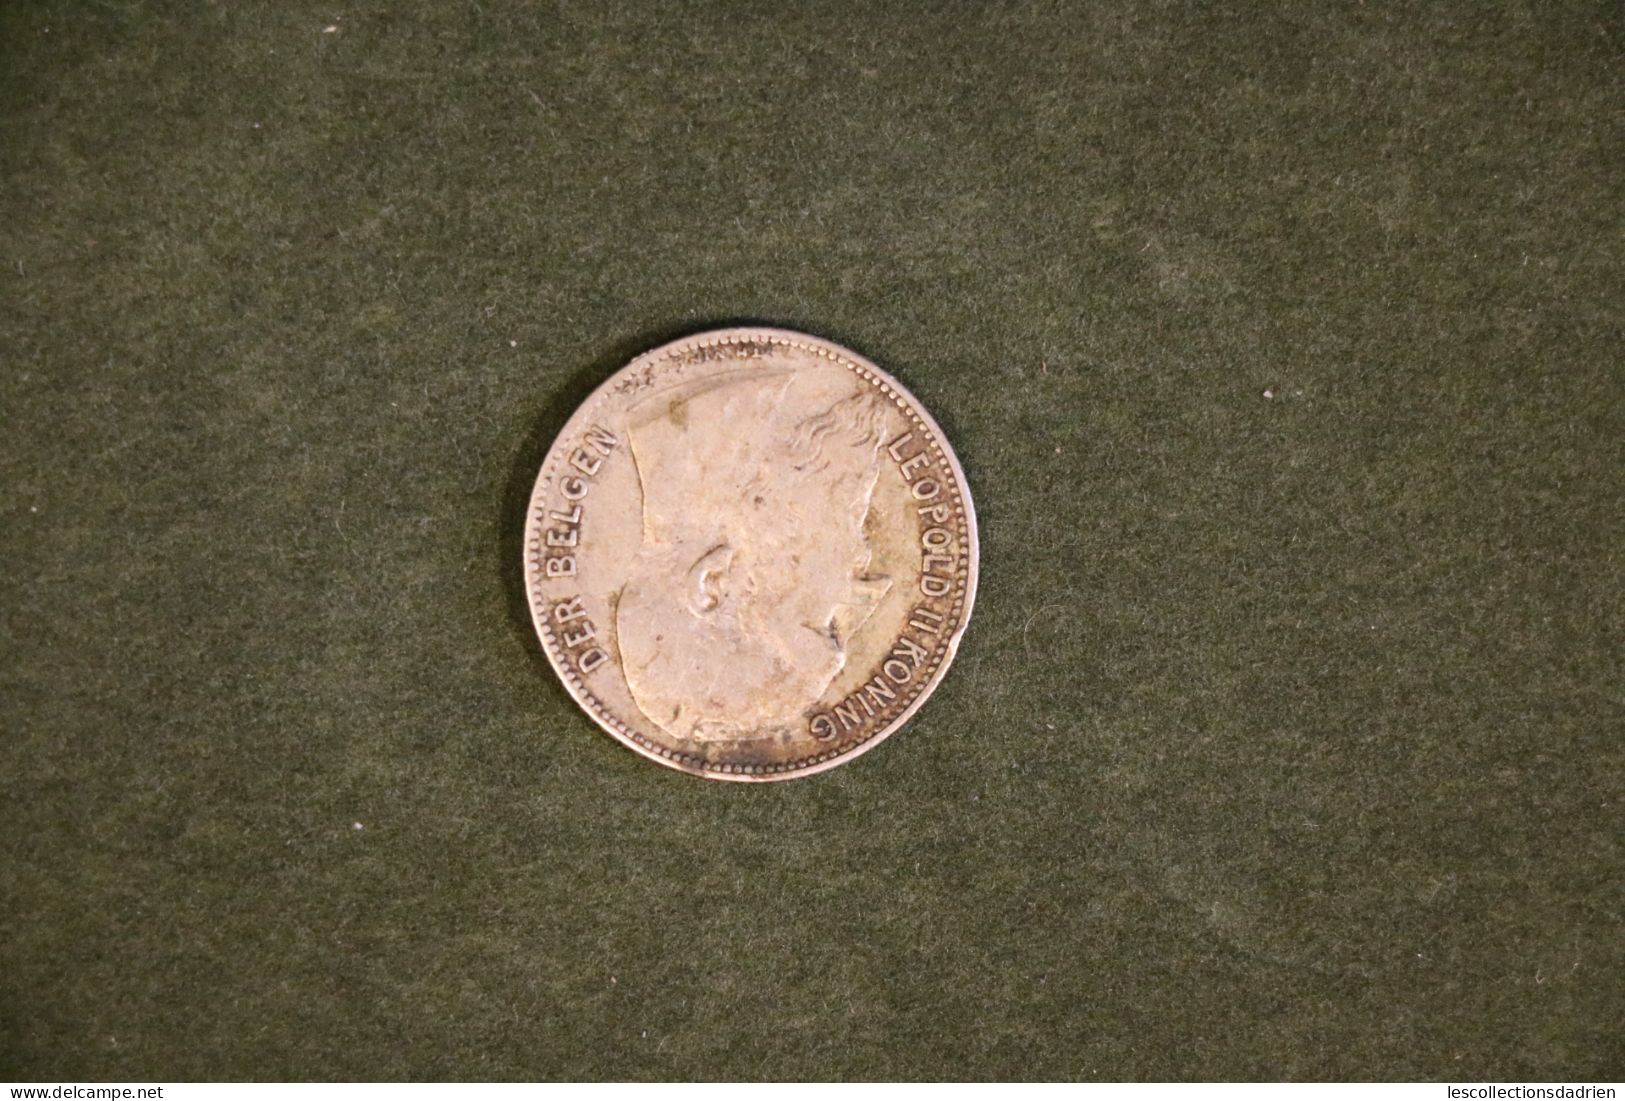 Pièce En Argent Belgique 1 Francs 1909 FL -  Belgian Silver Coin - 1 Franc